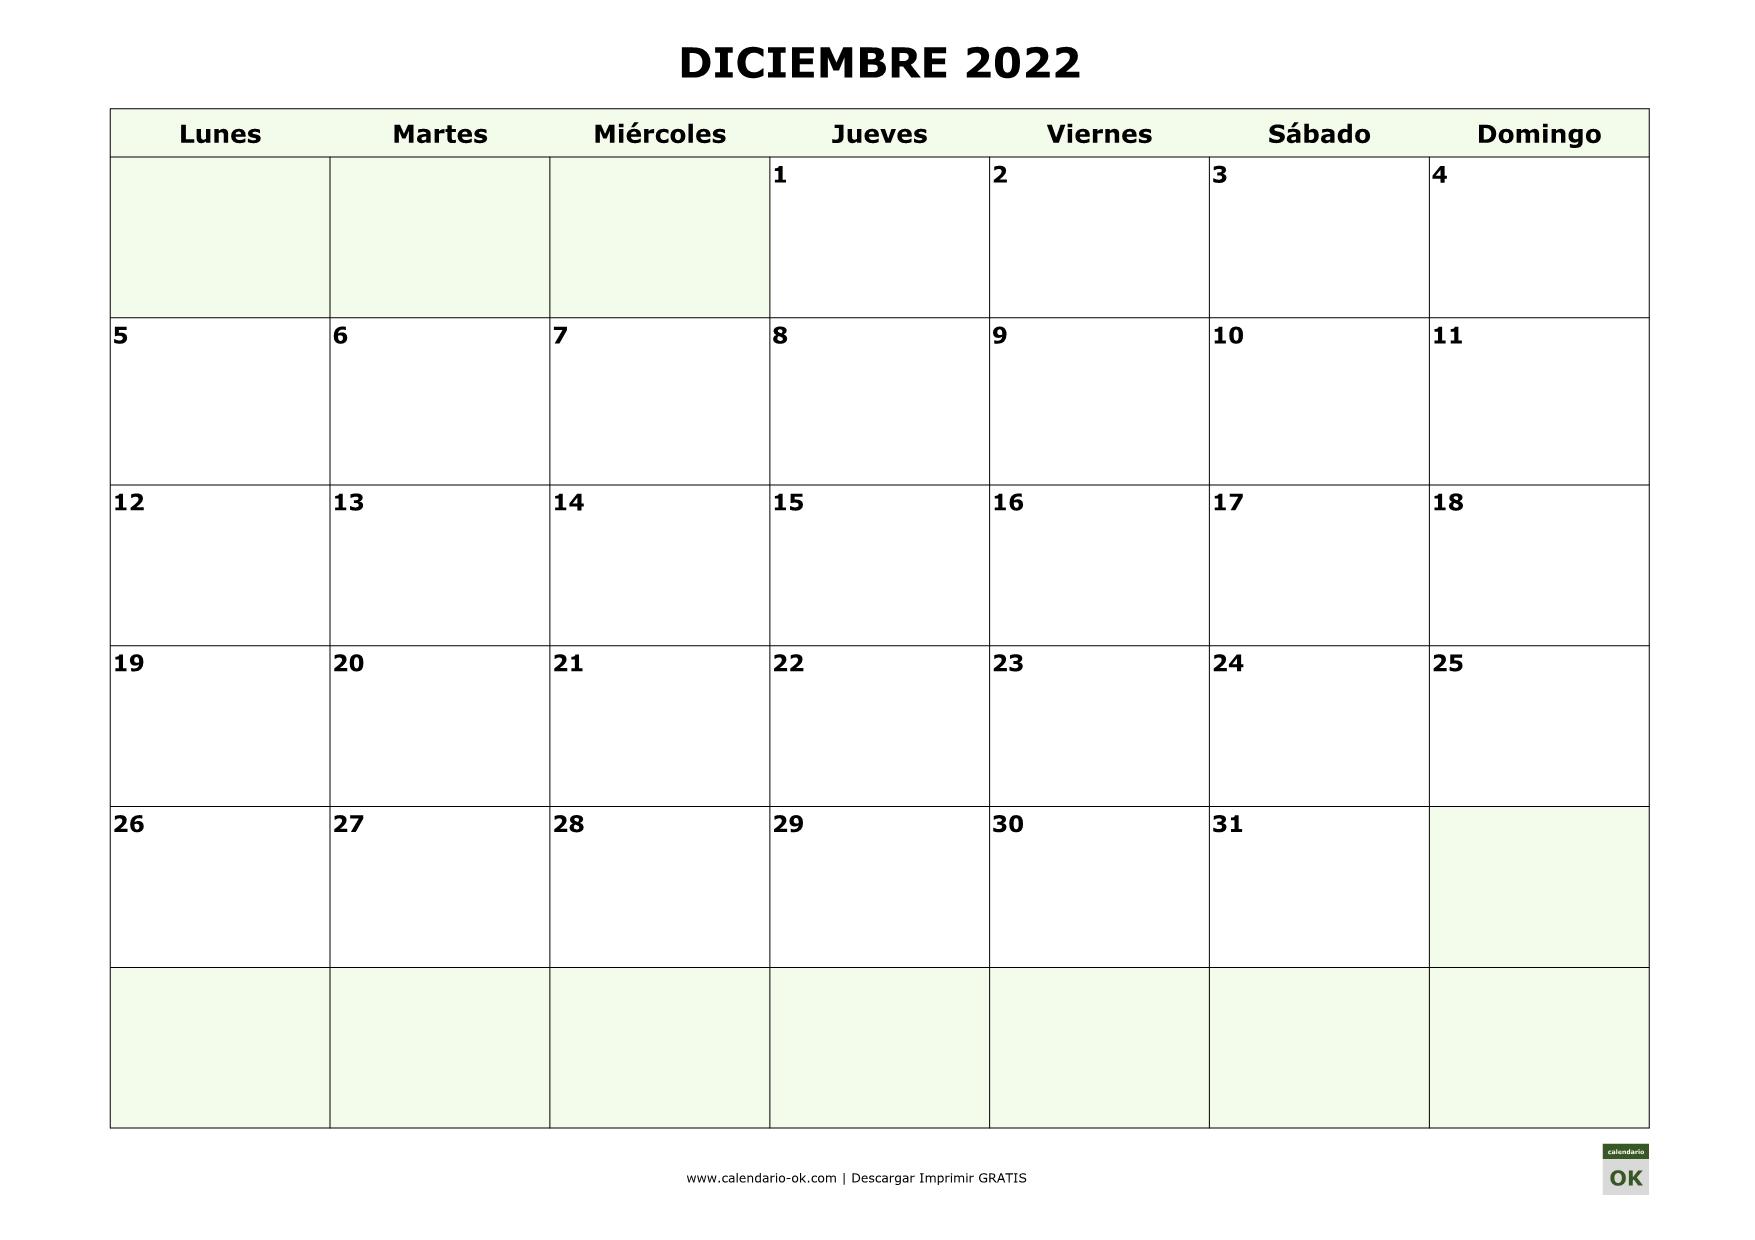 Diciembre 2022 para IMPRIMIR